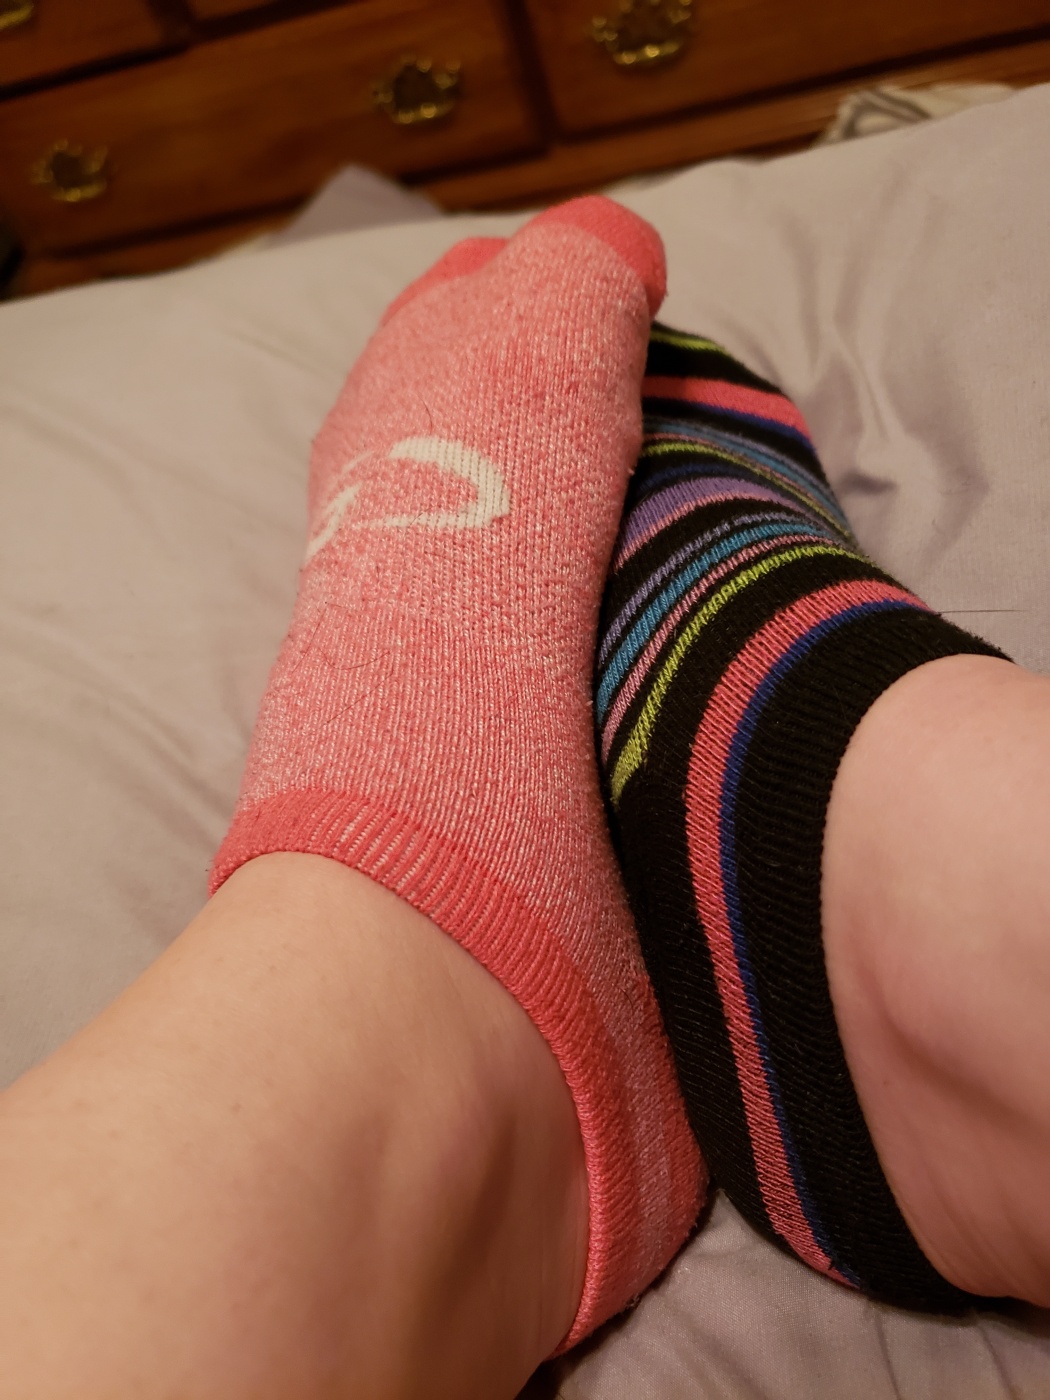 Stinky socks from a long work da…